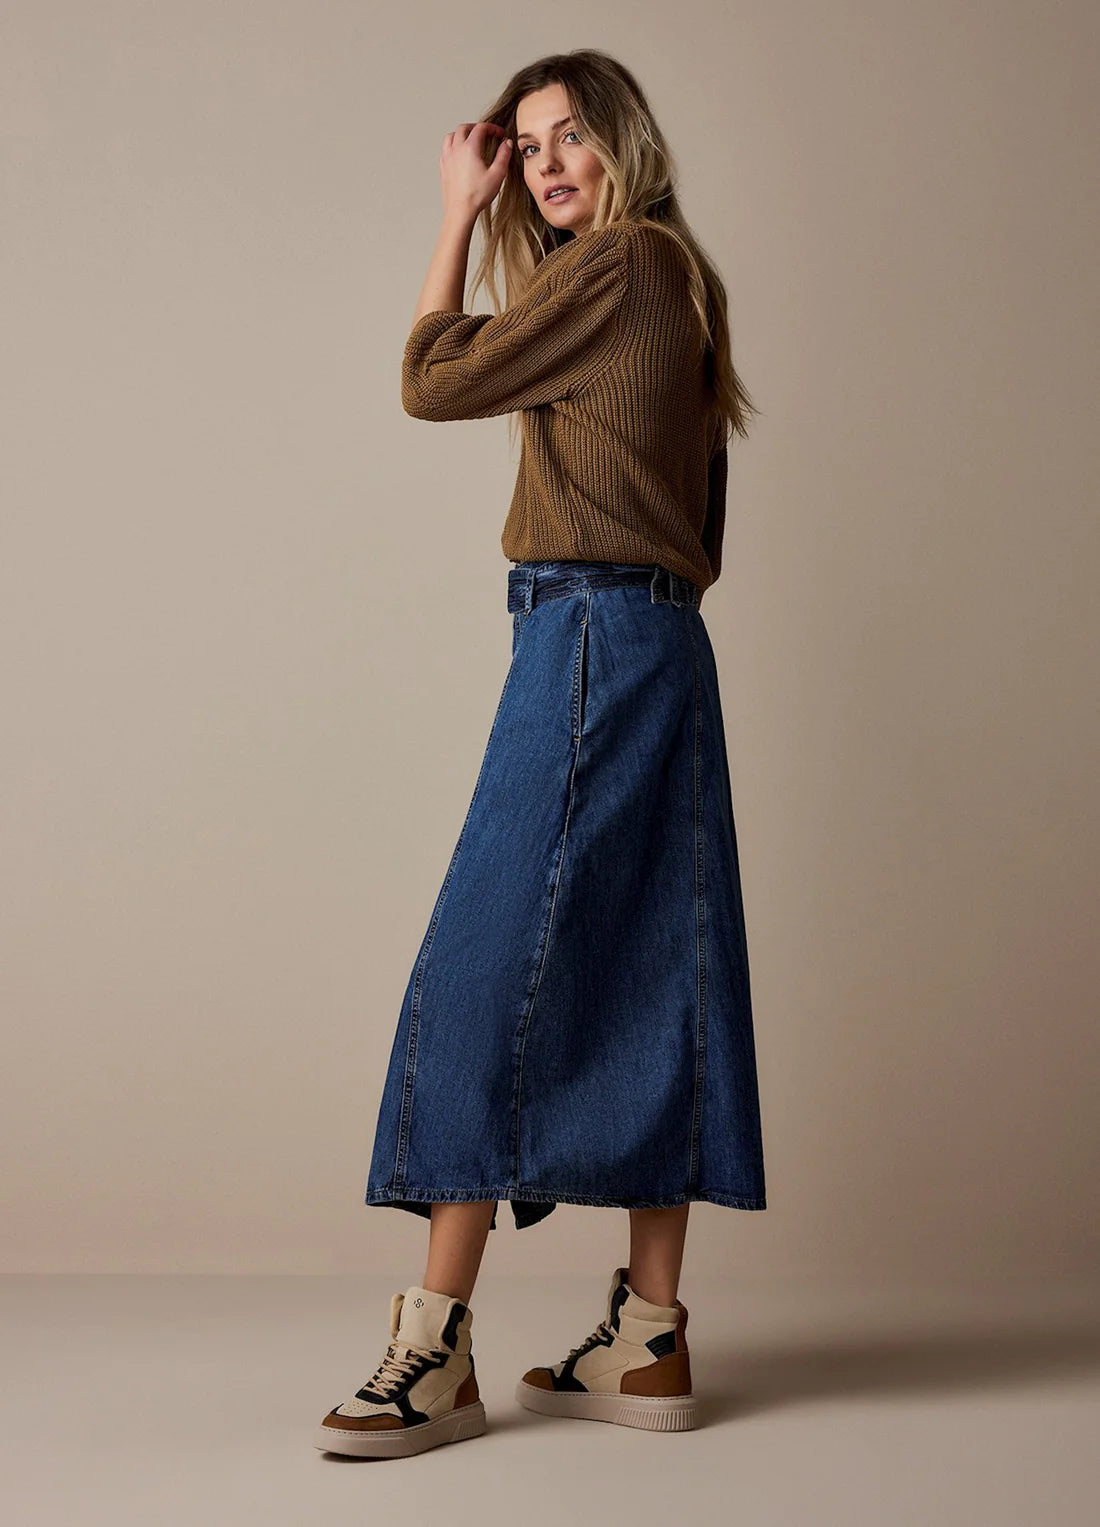 Summum | Denim skirt - vintage blue - 6s2147-5112